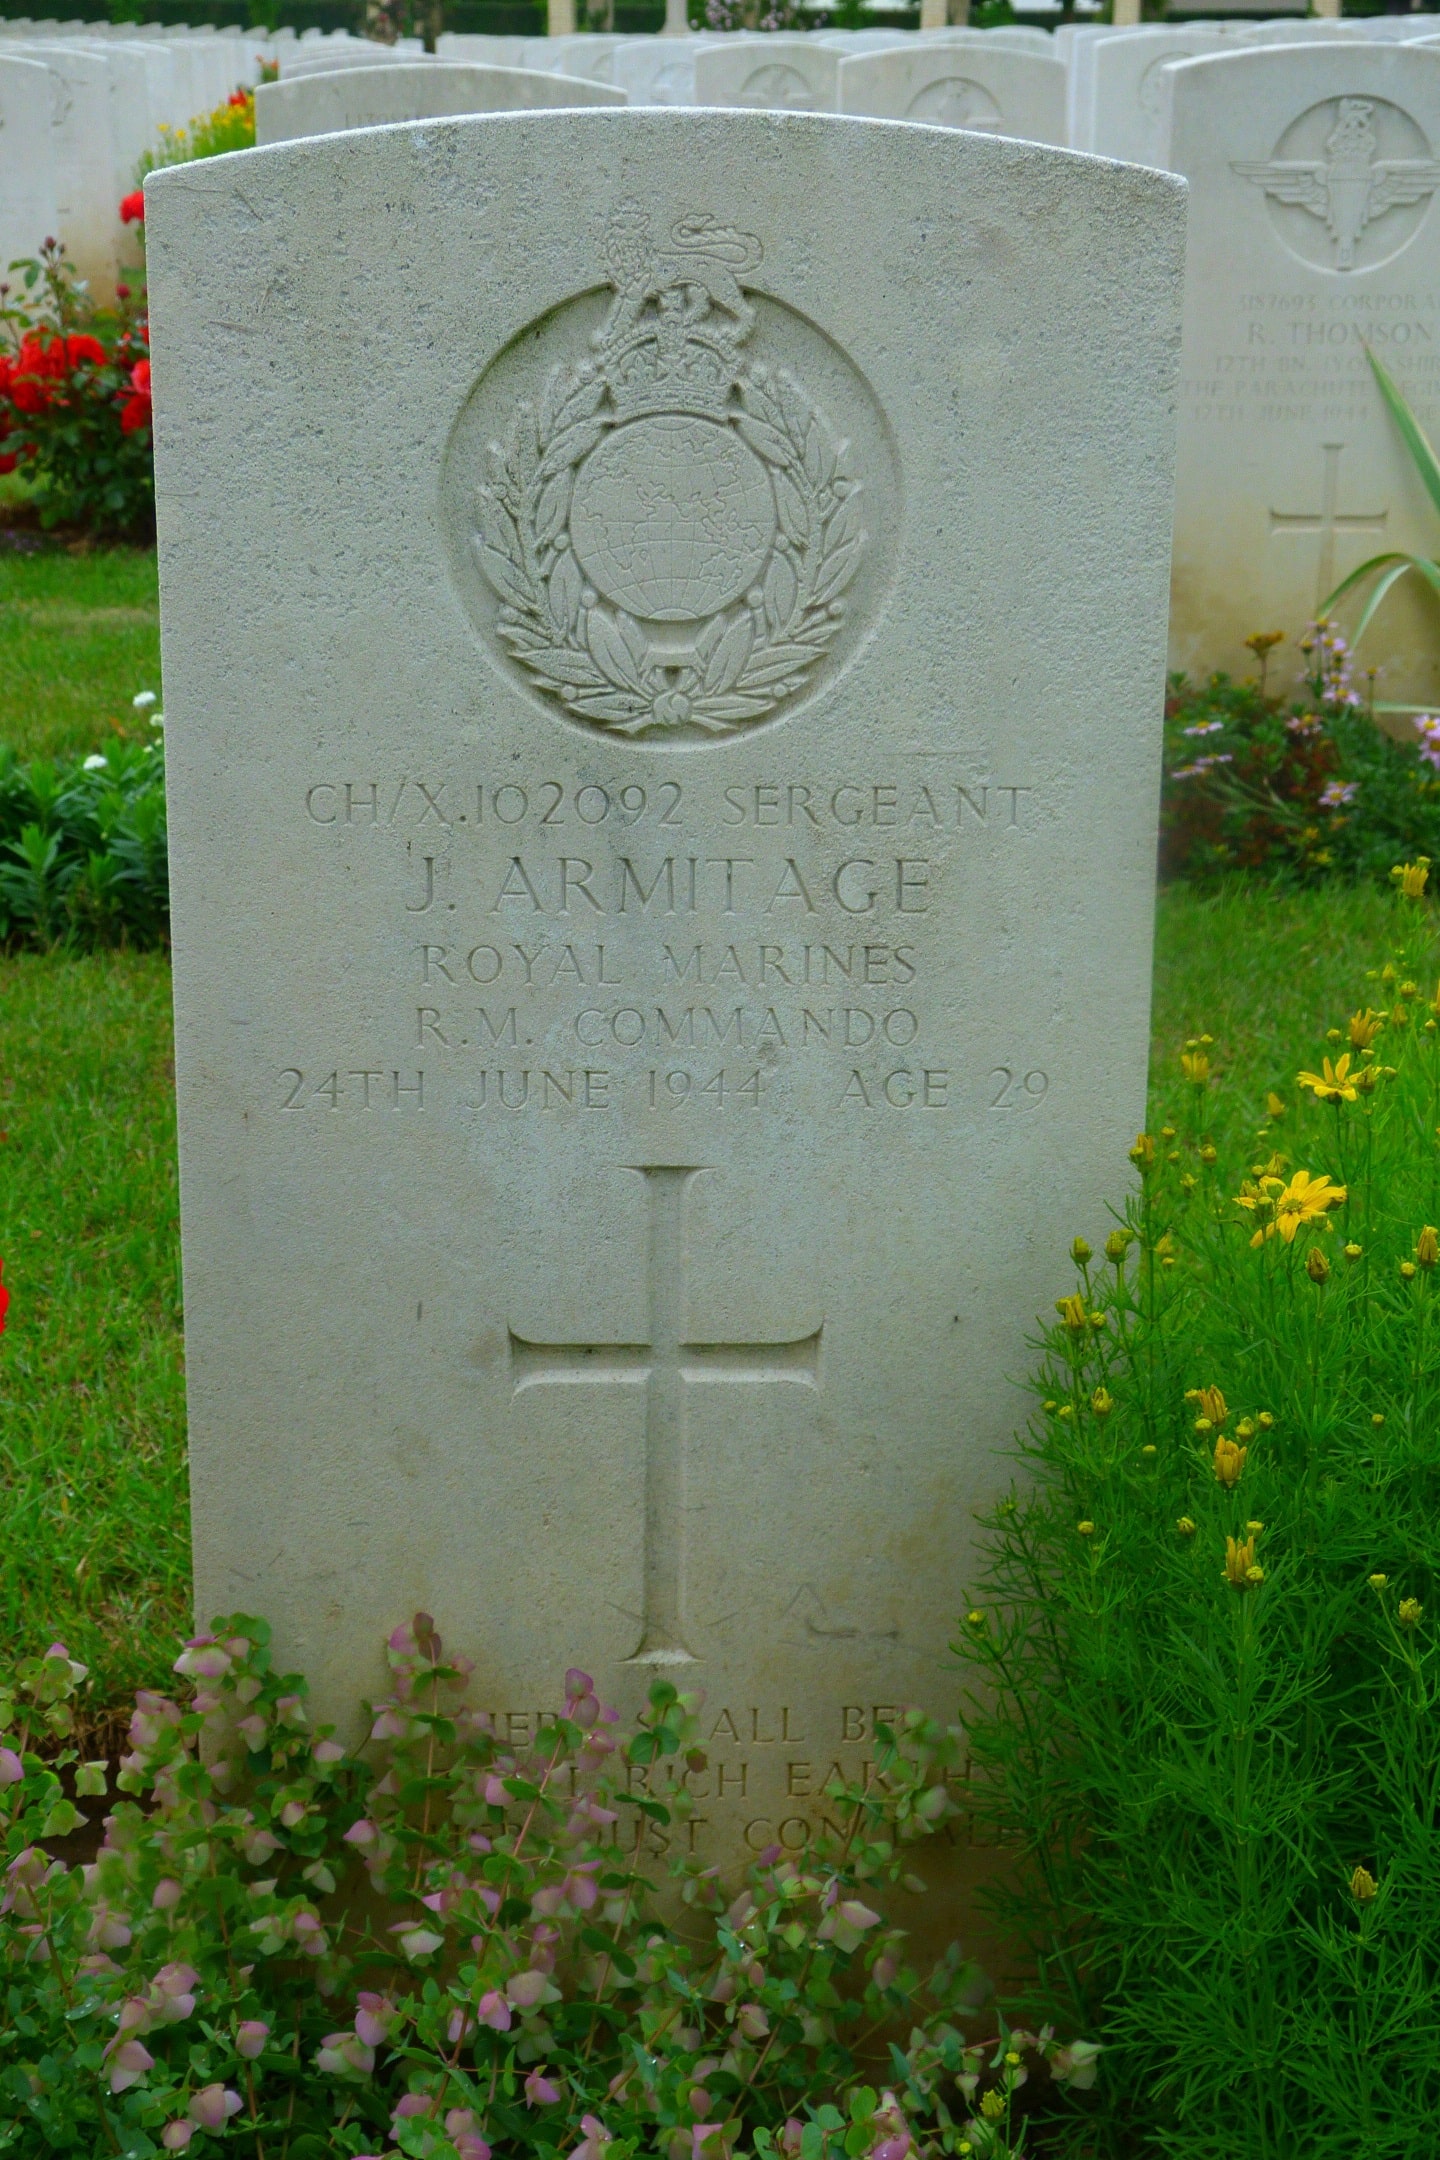 J. Armitage (Grave)